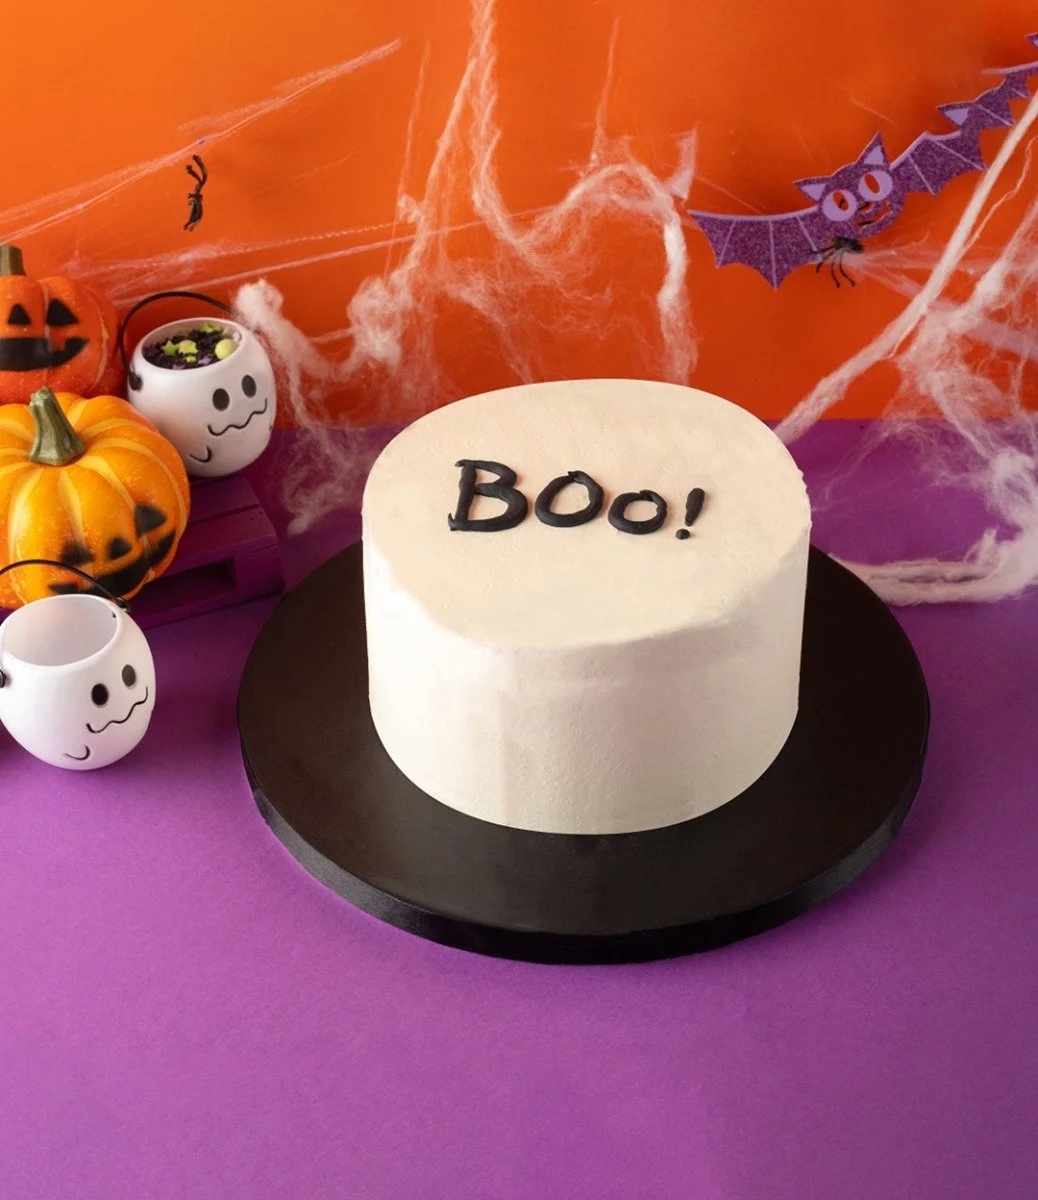 BOO! Cake by Cake Social